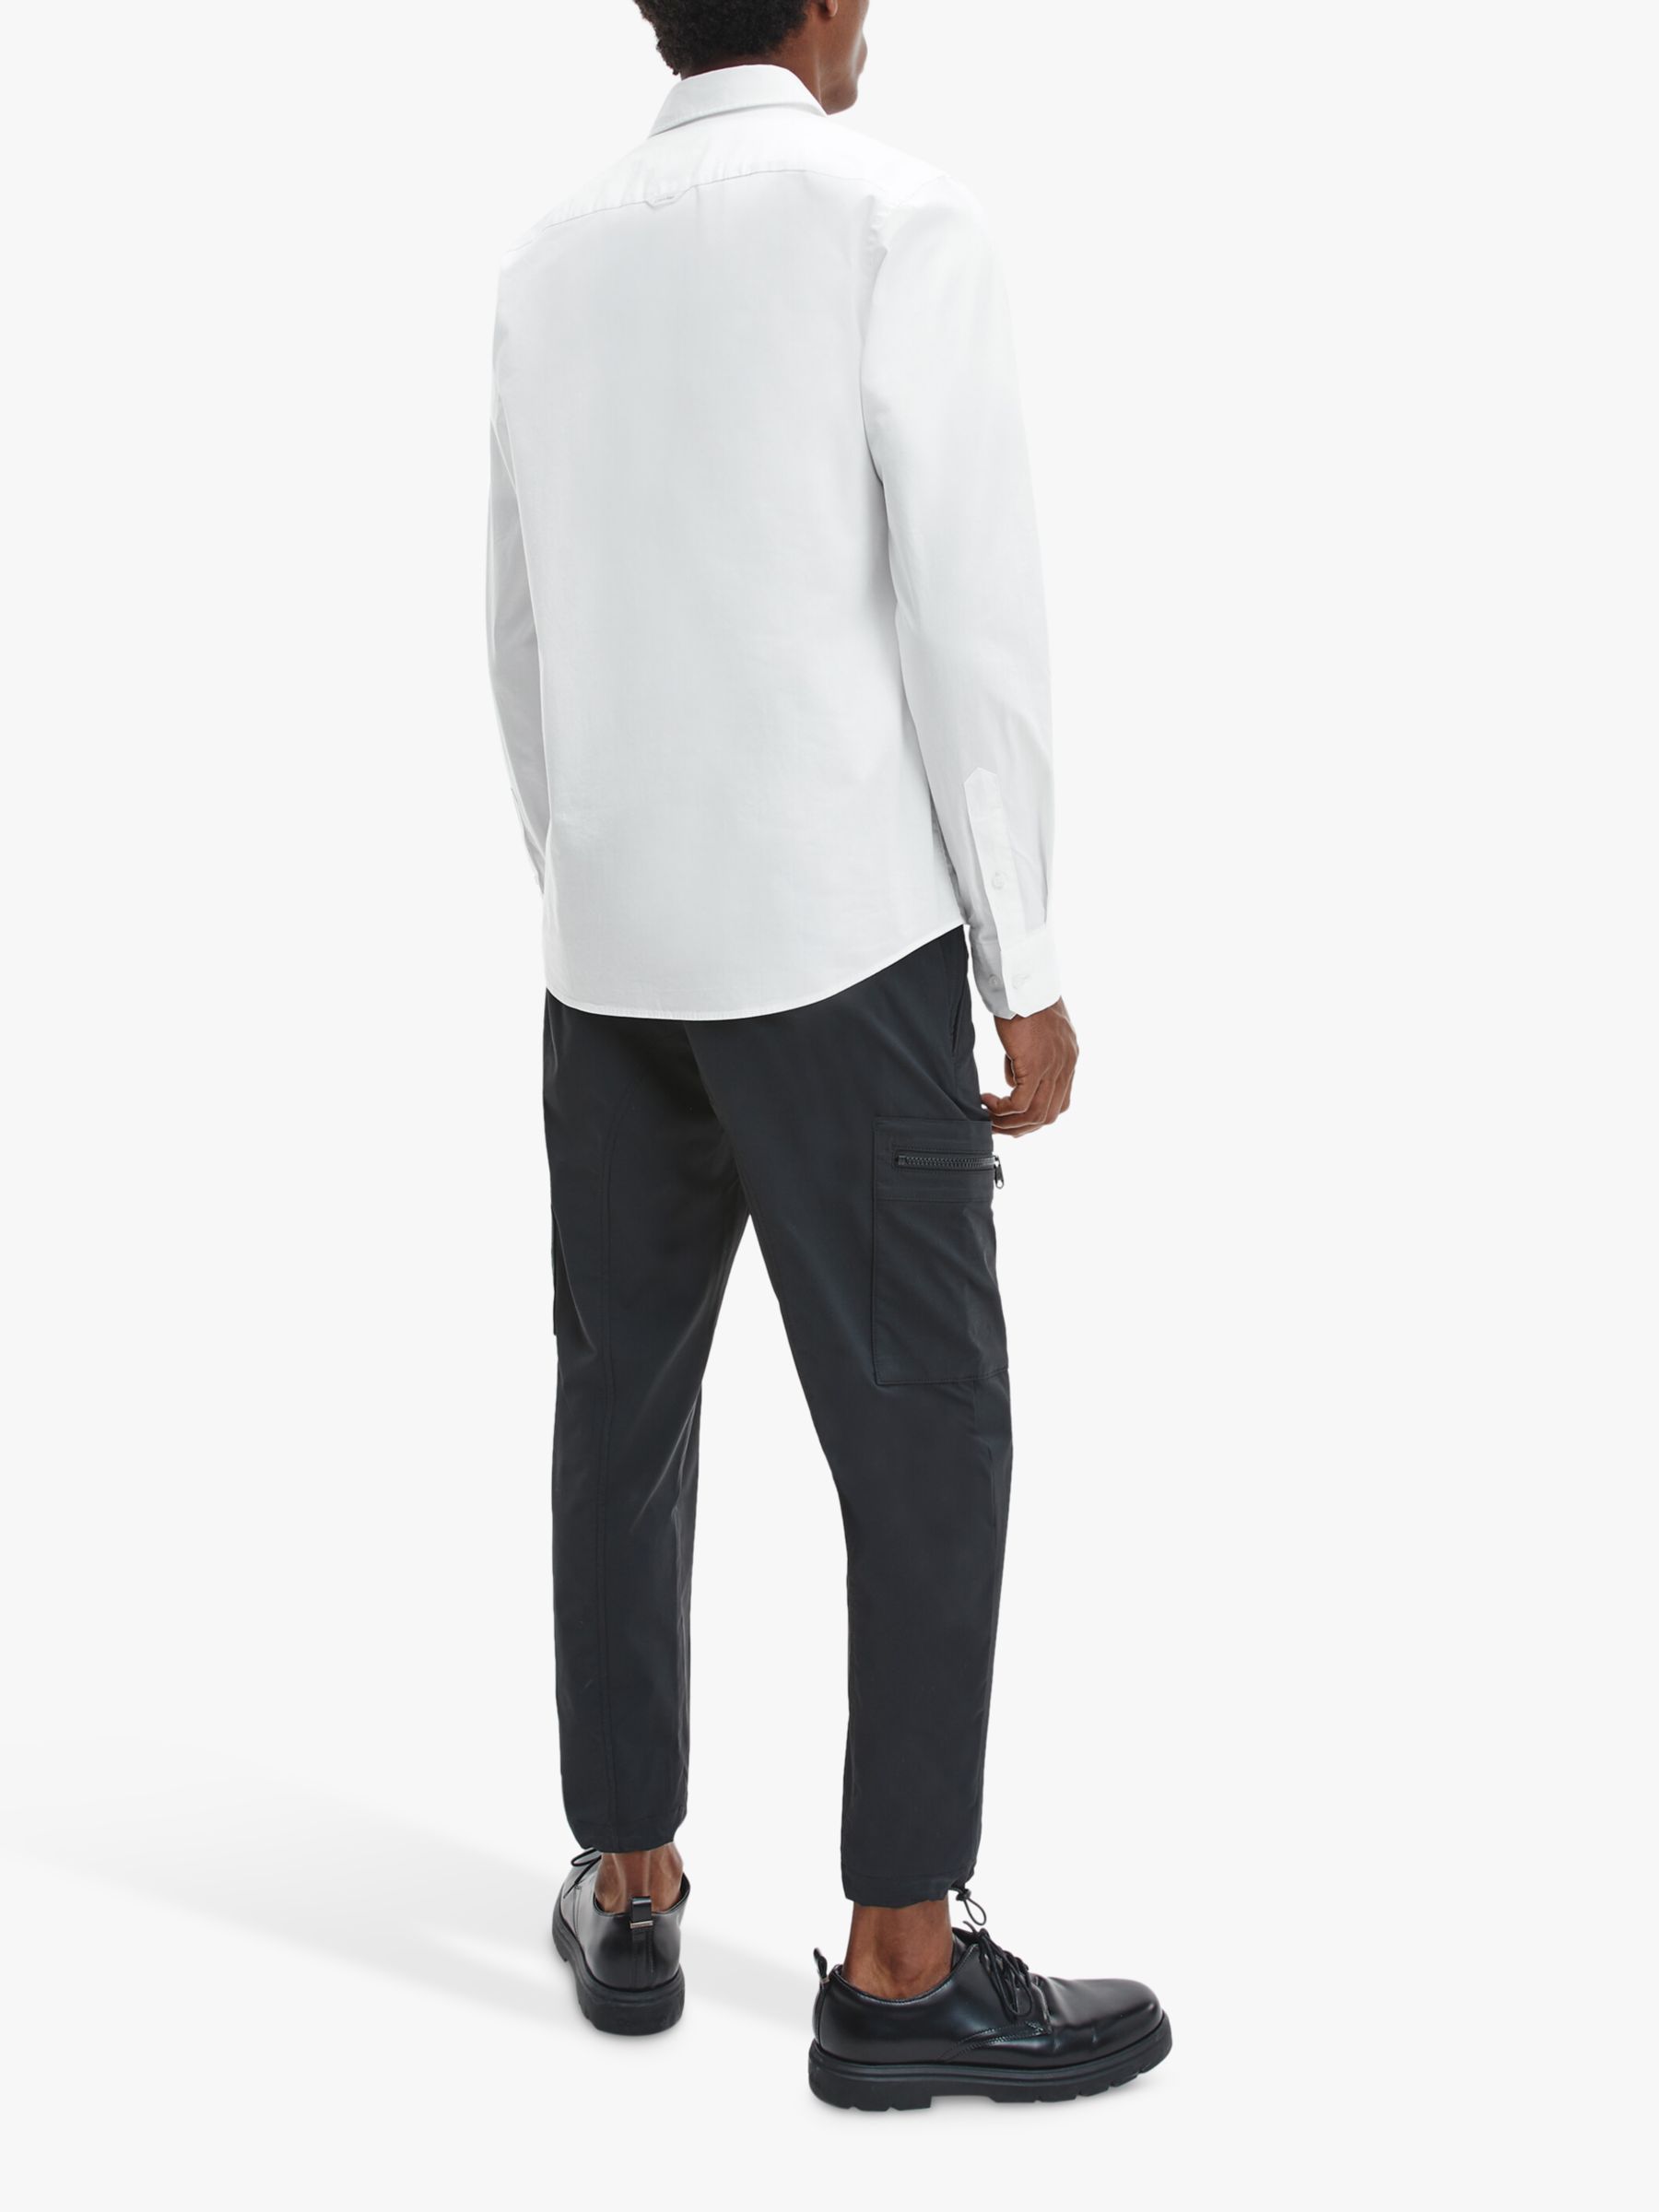 Calvin Klein Slim Stretch Shirt, Bright White at John Lewis & Partners